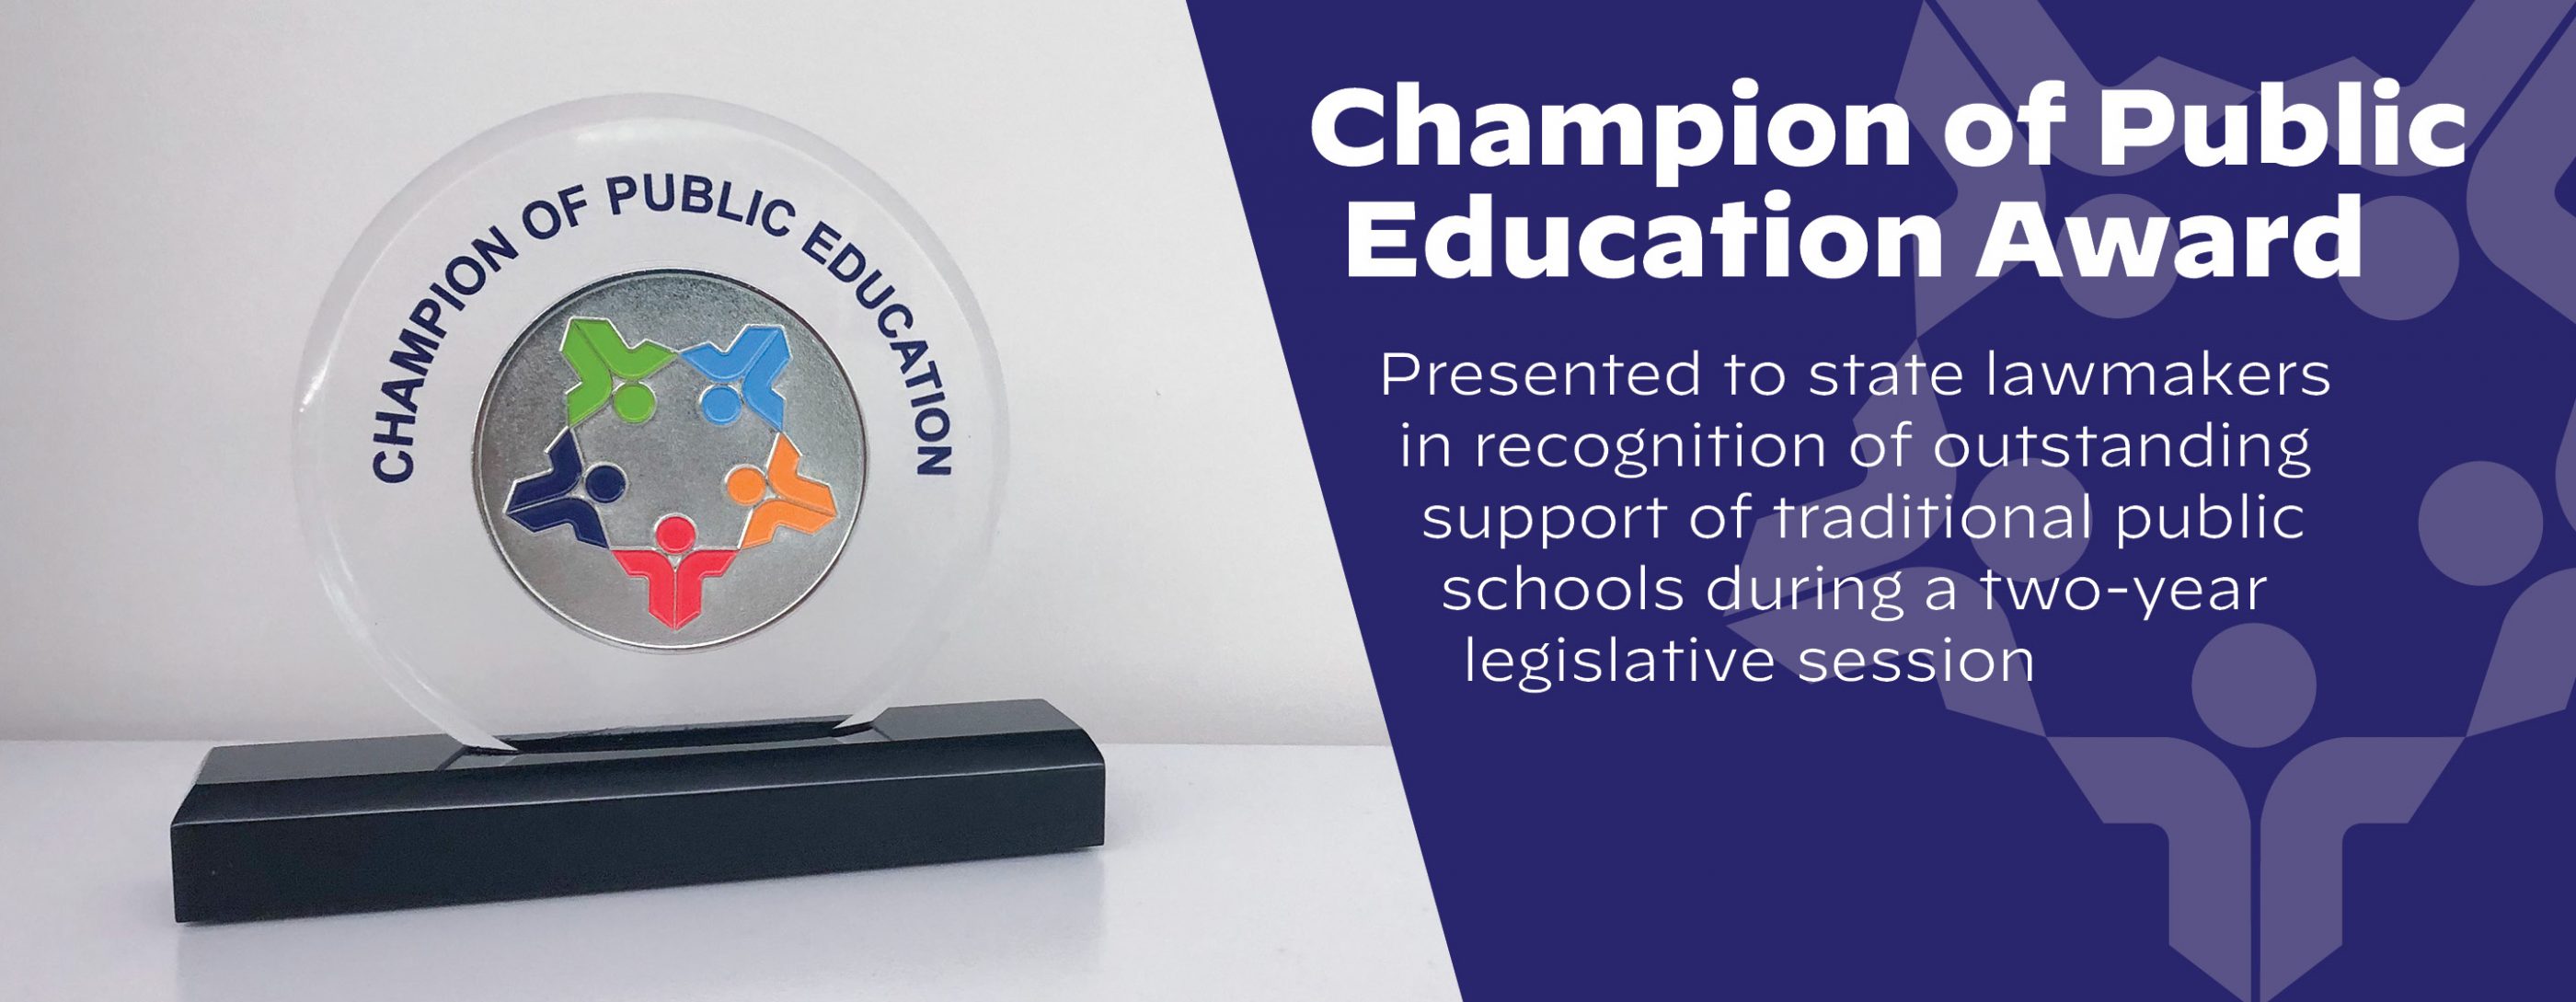 Champion of Public Education Award presented to legislators